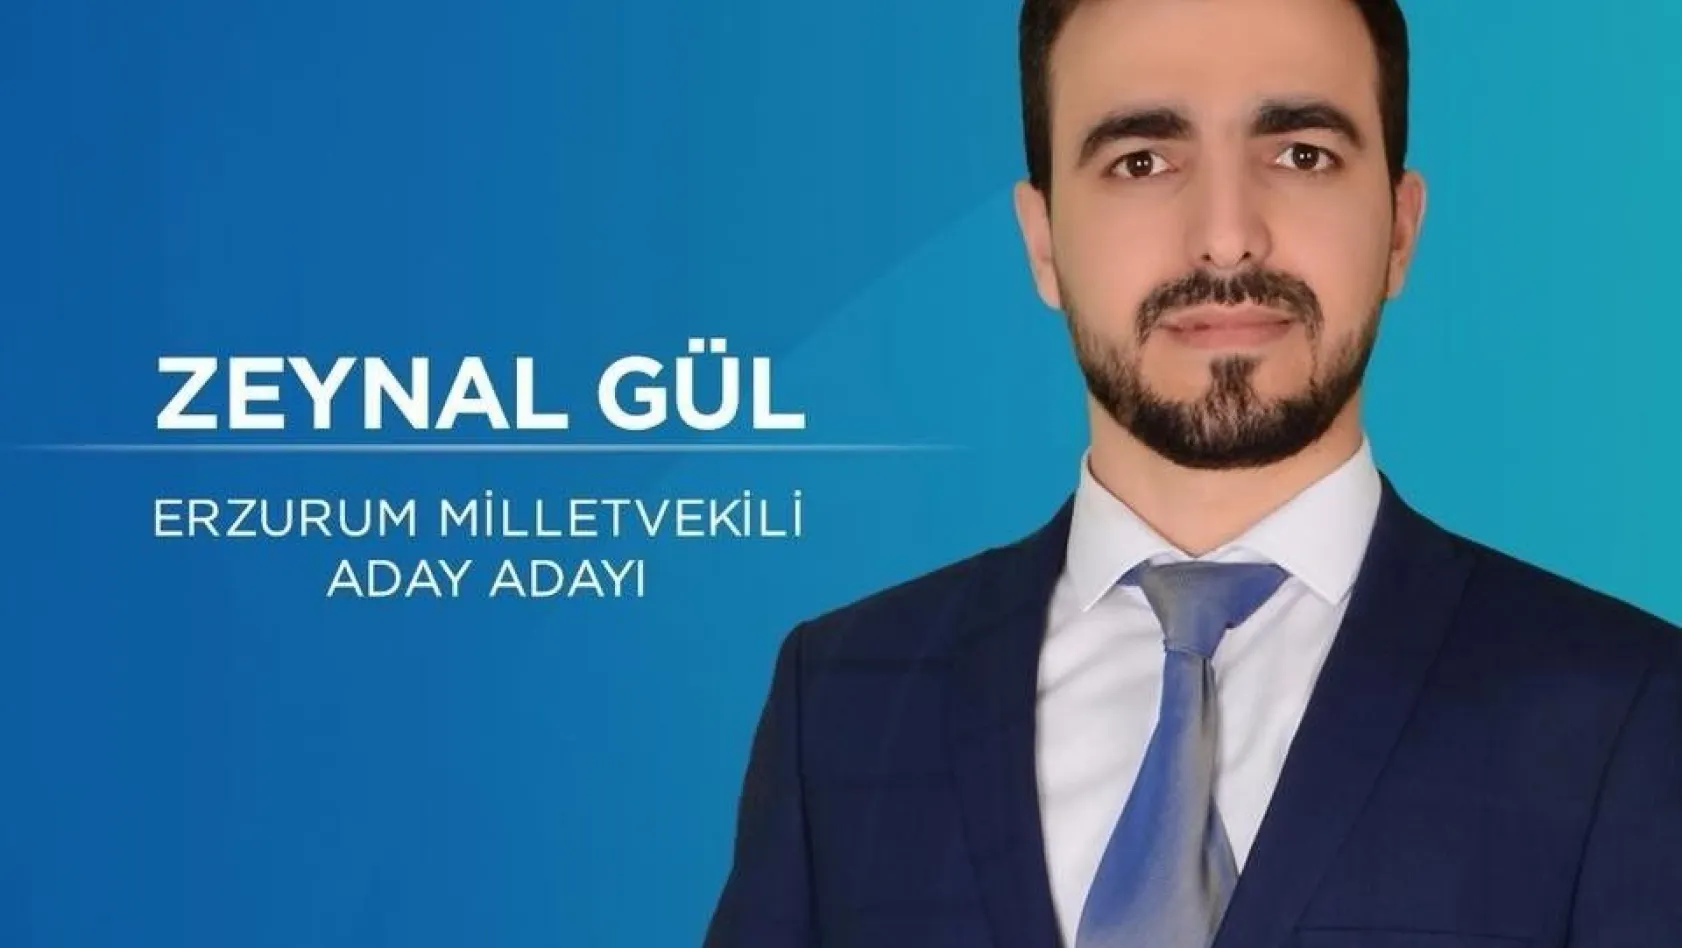 AK Parti Milletvekili aday adayı Zeynal Gül'den Berat Kandili mesajı
